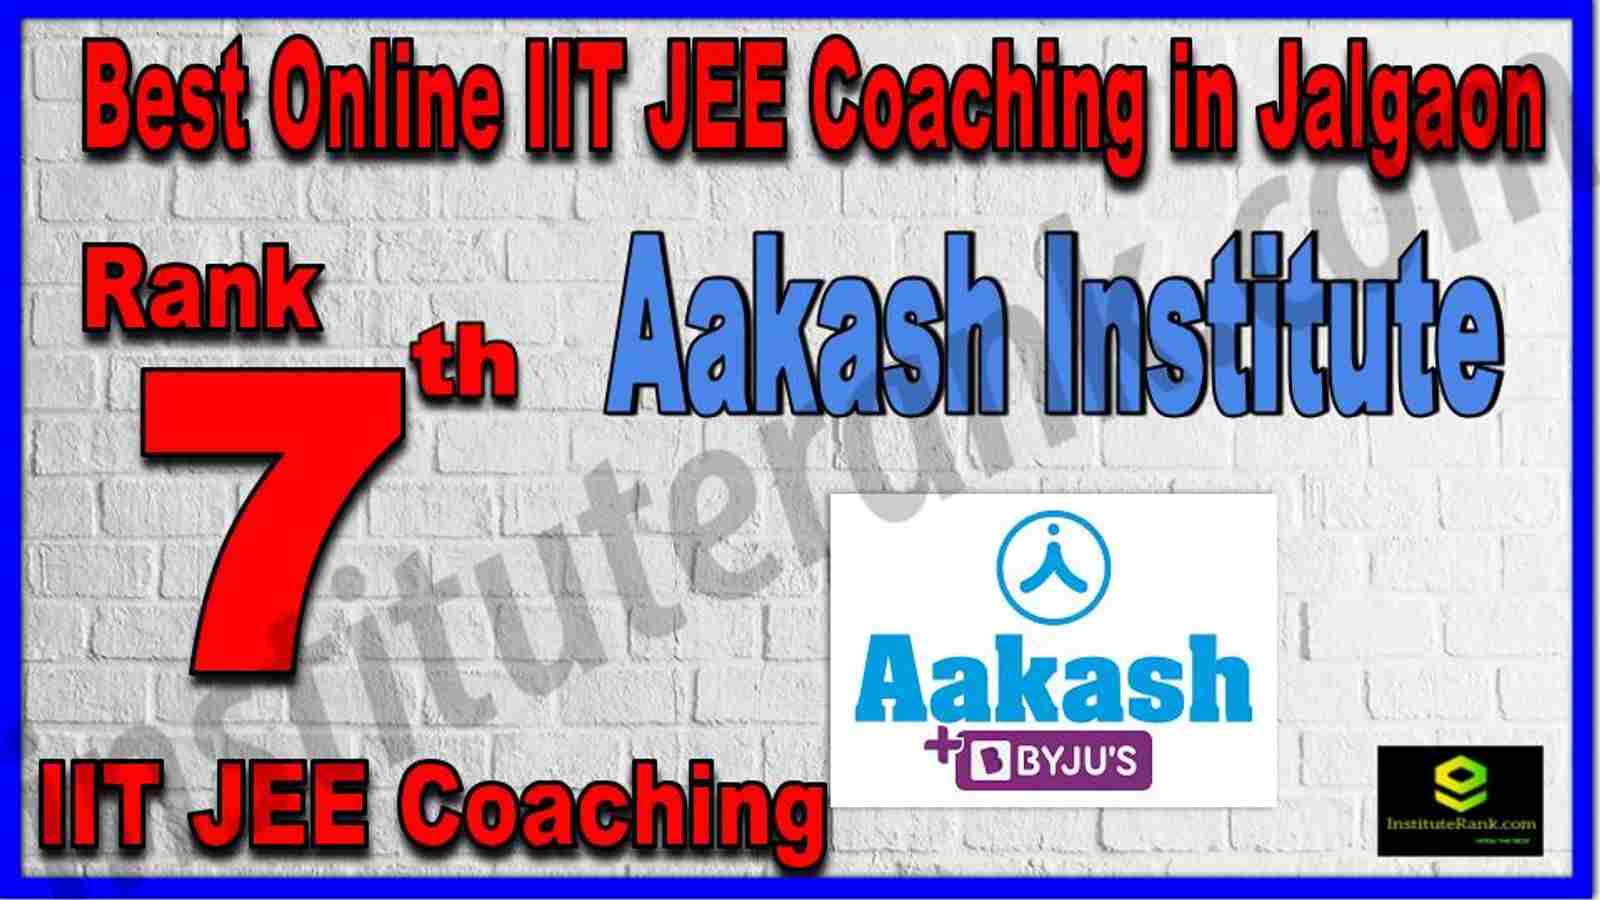 Rank 7th Best Online IIT JEE Coaching in Jalgaon